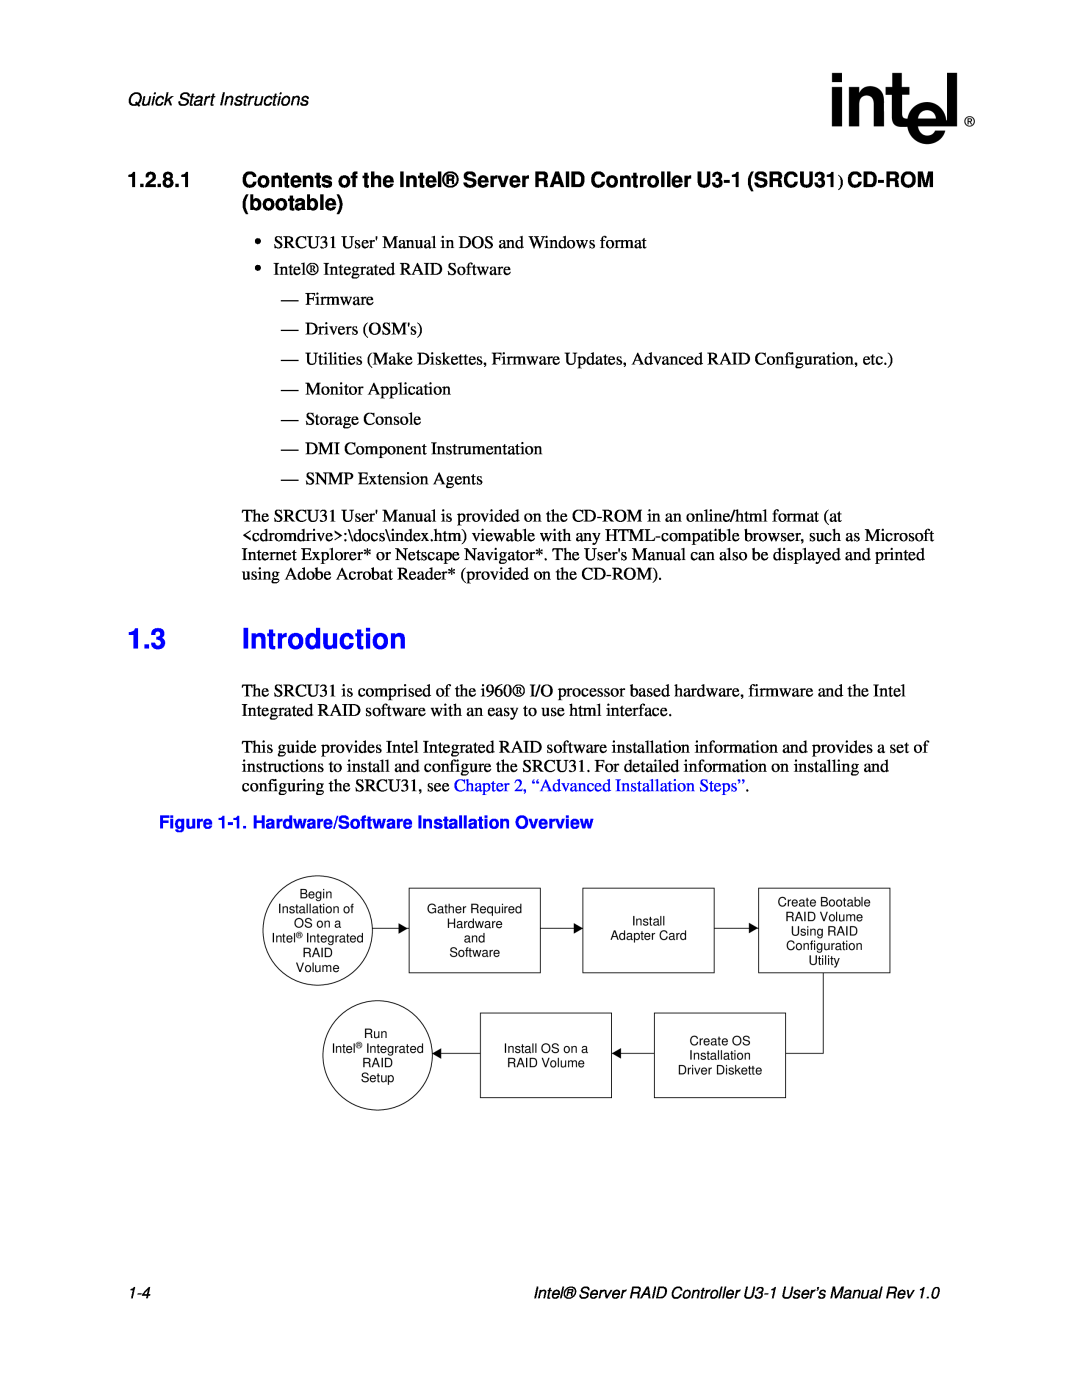 Intel SRCU31 user manual 1.3Introduction, Quick Start Instructions 